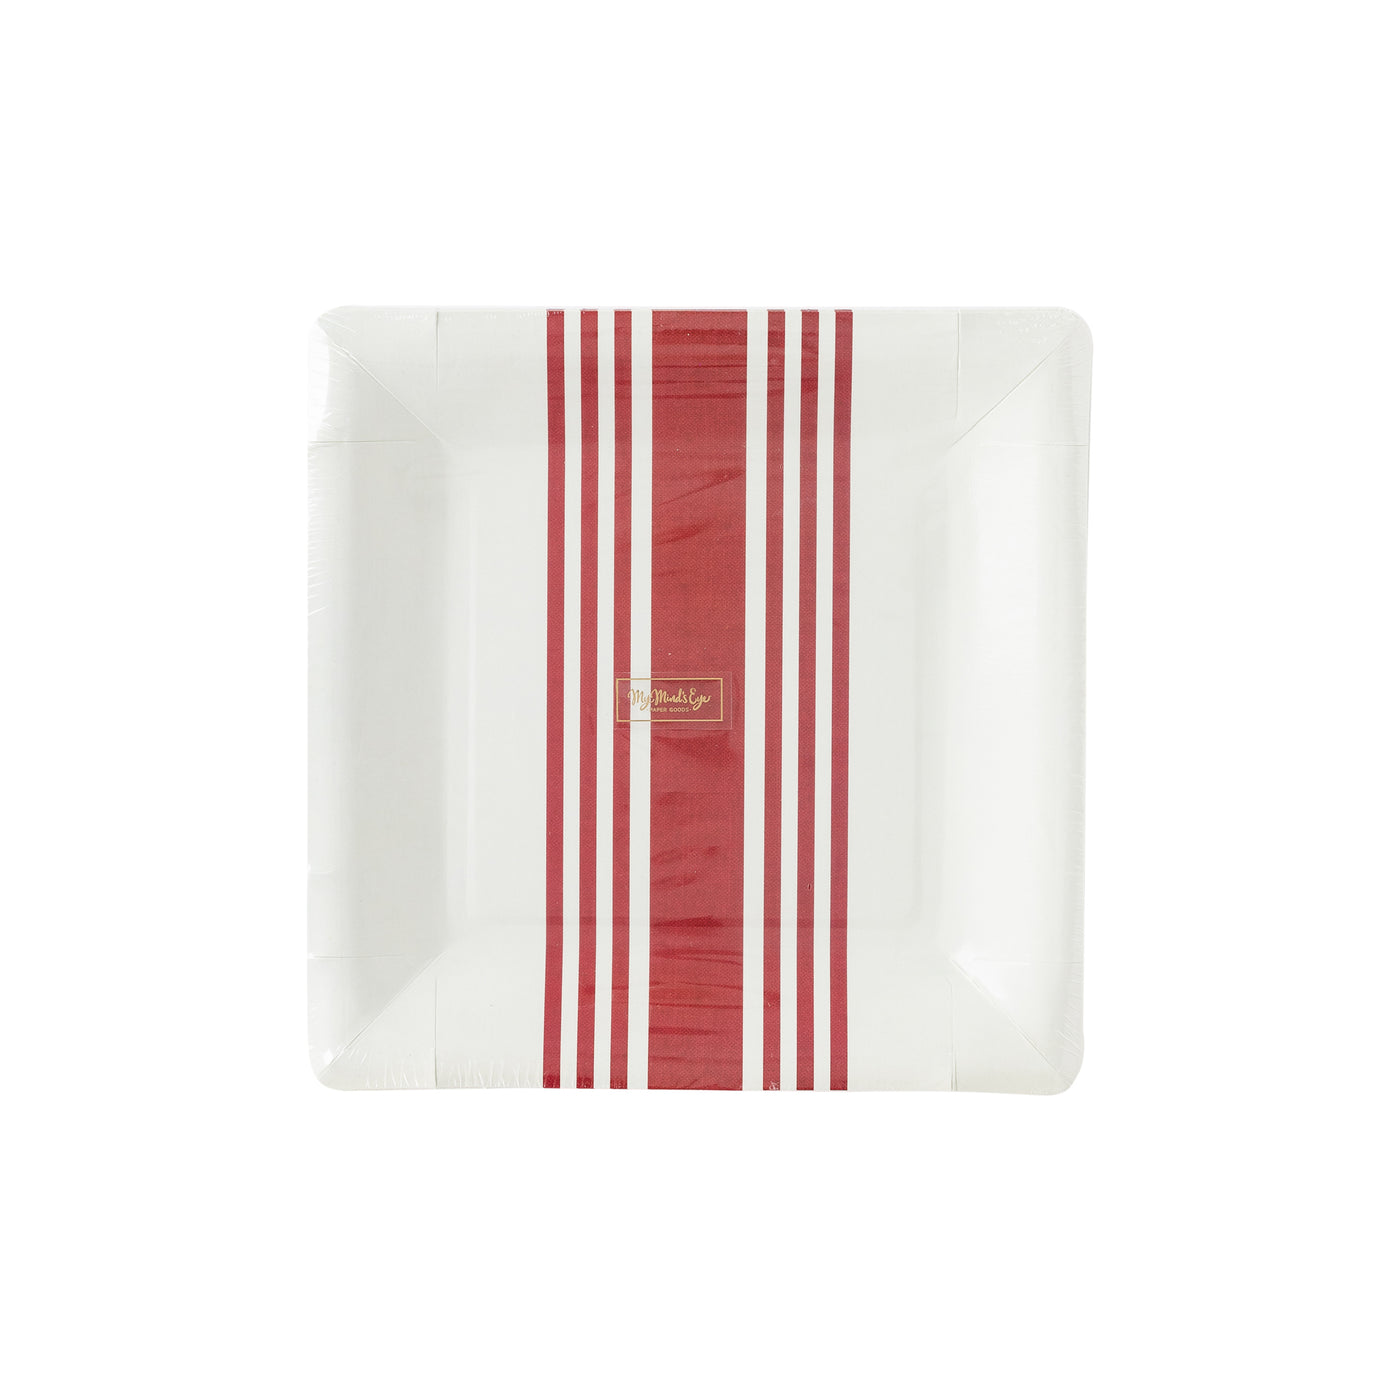 HAM943 - Red Striped Plates